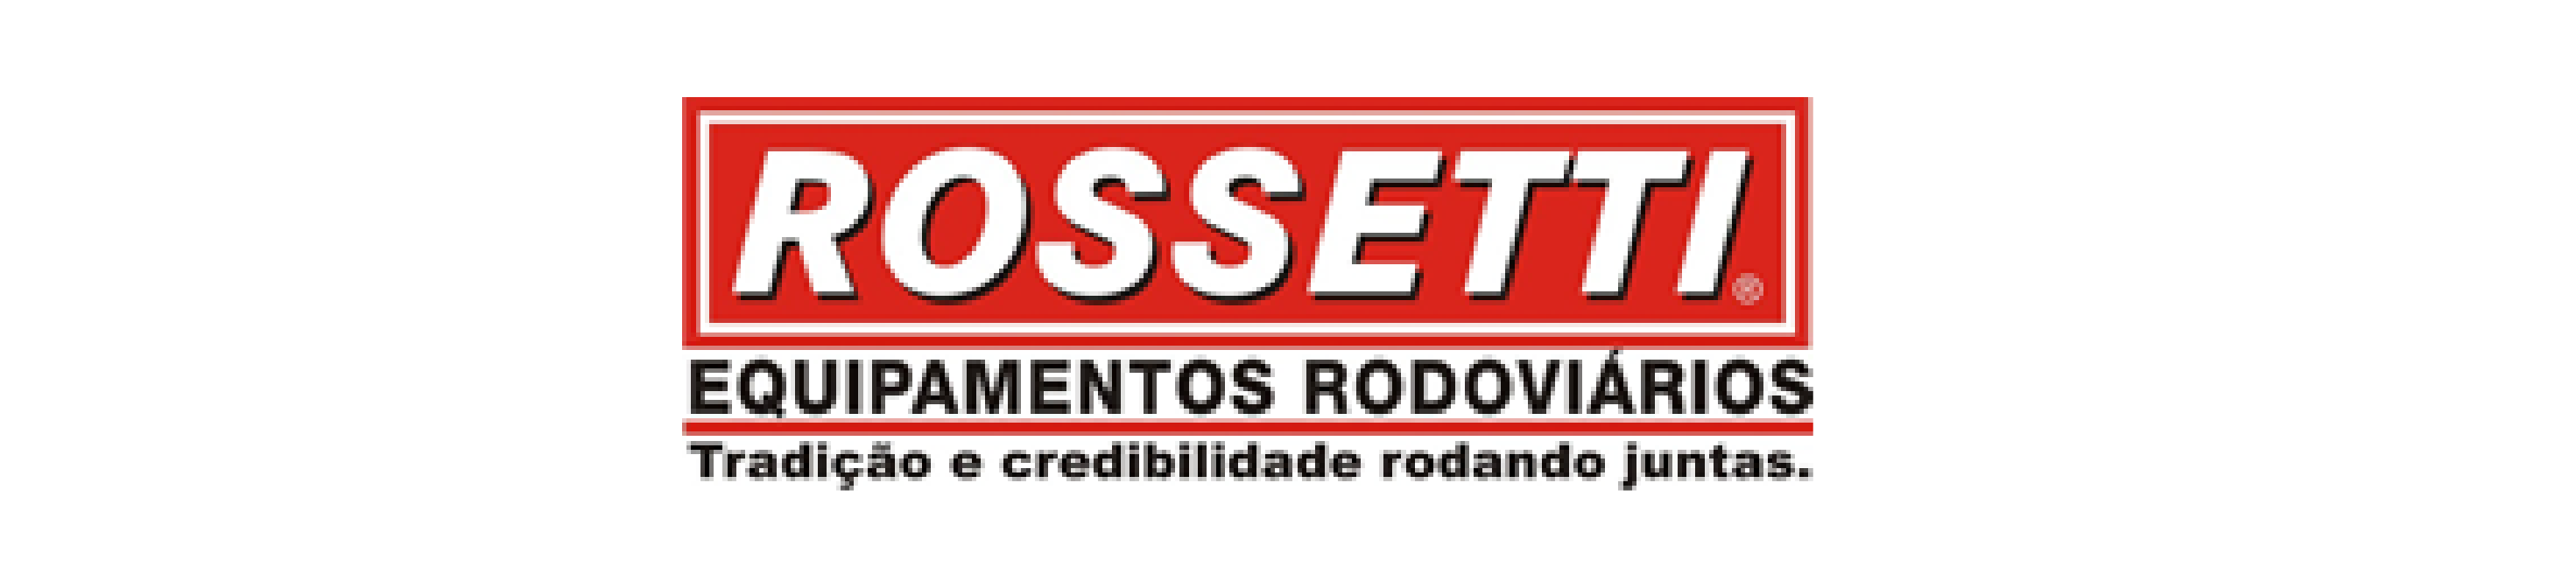 rossetti-01